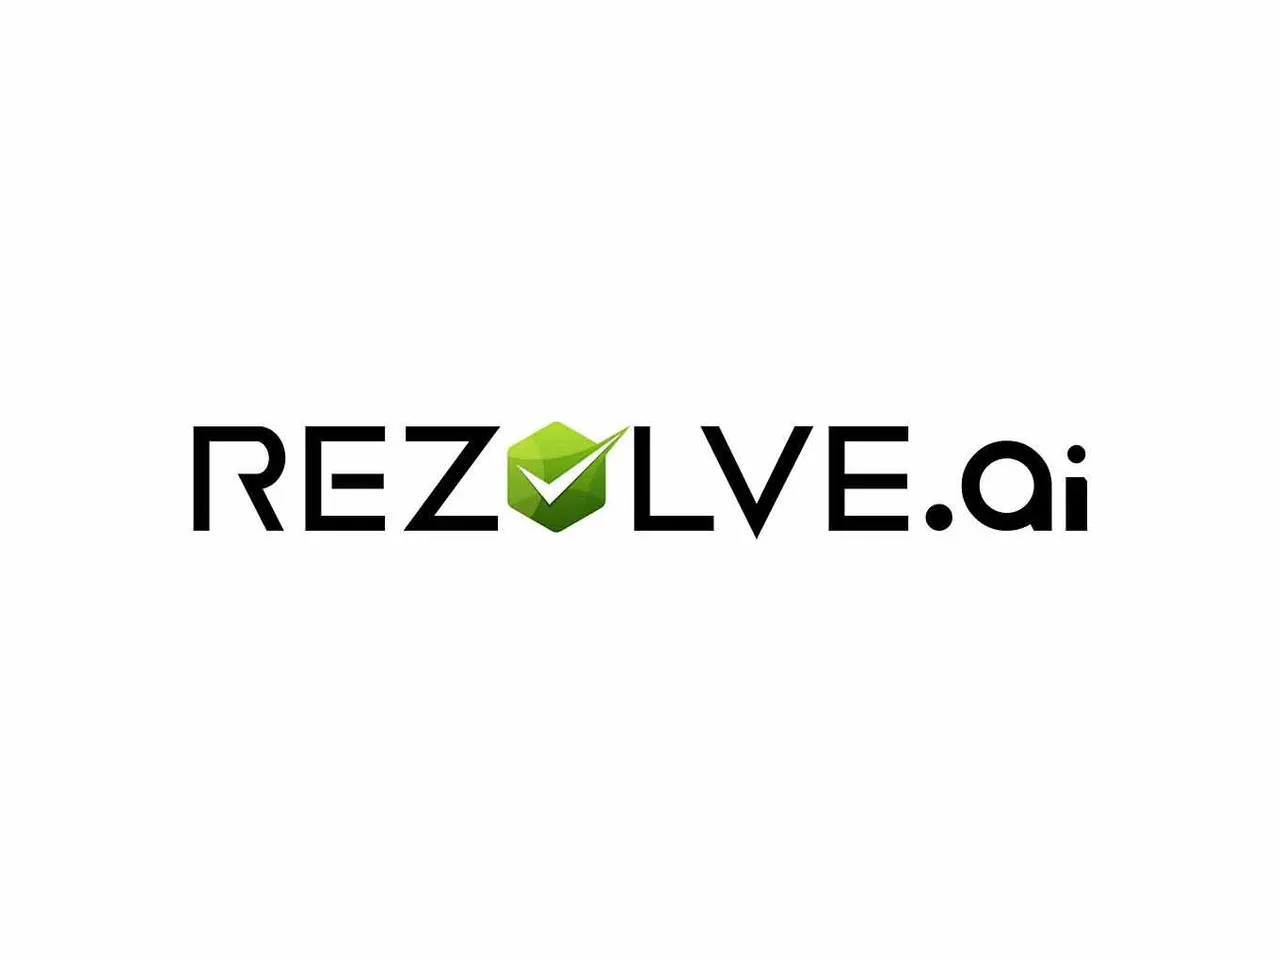 Rezolve.ai Raises $11M Series A funding round led by SIG Venture Capital